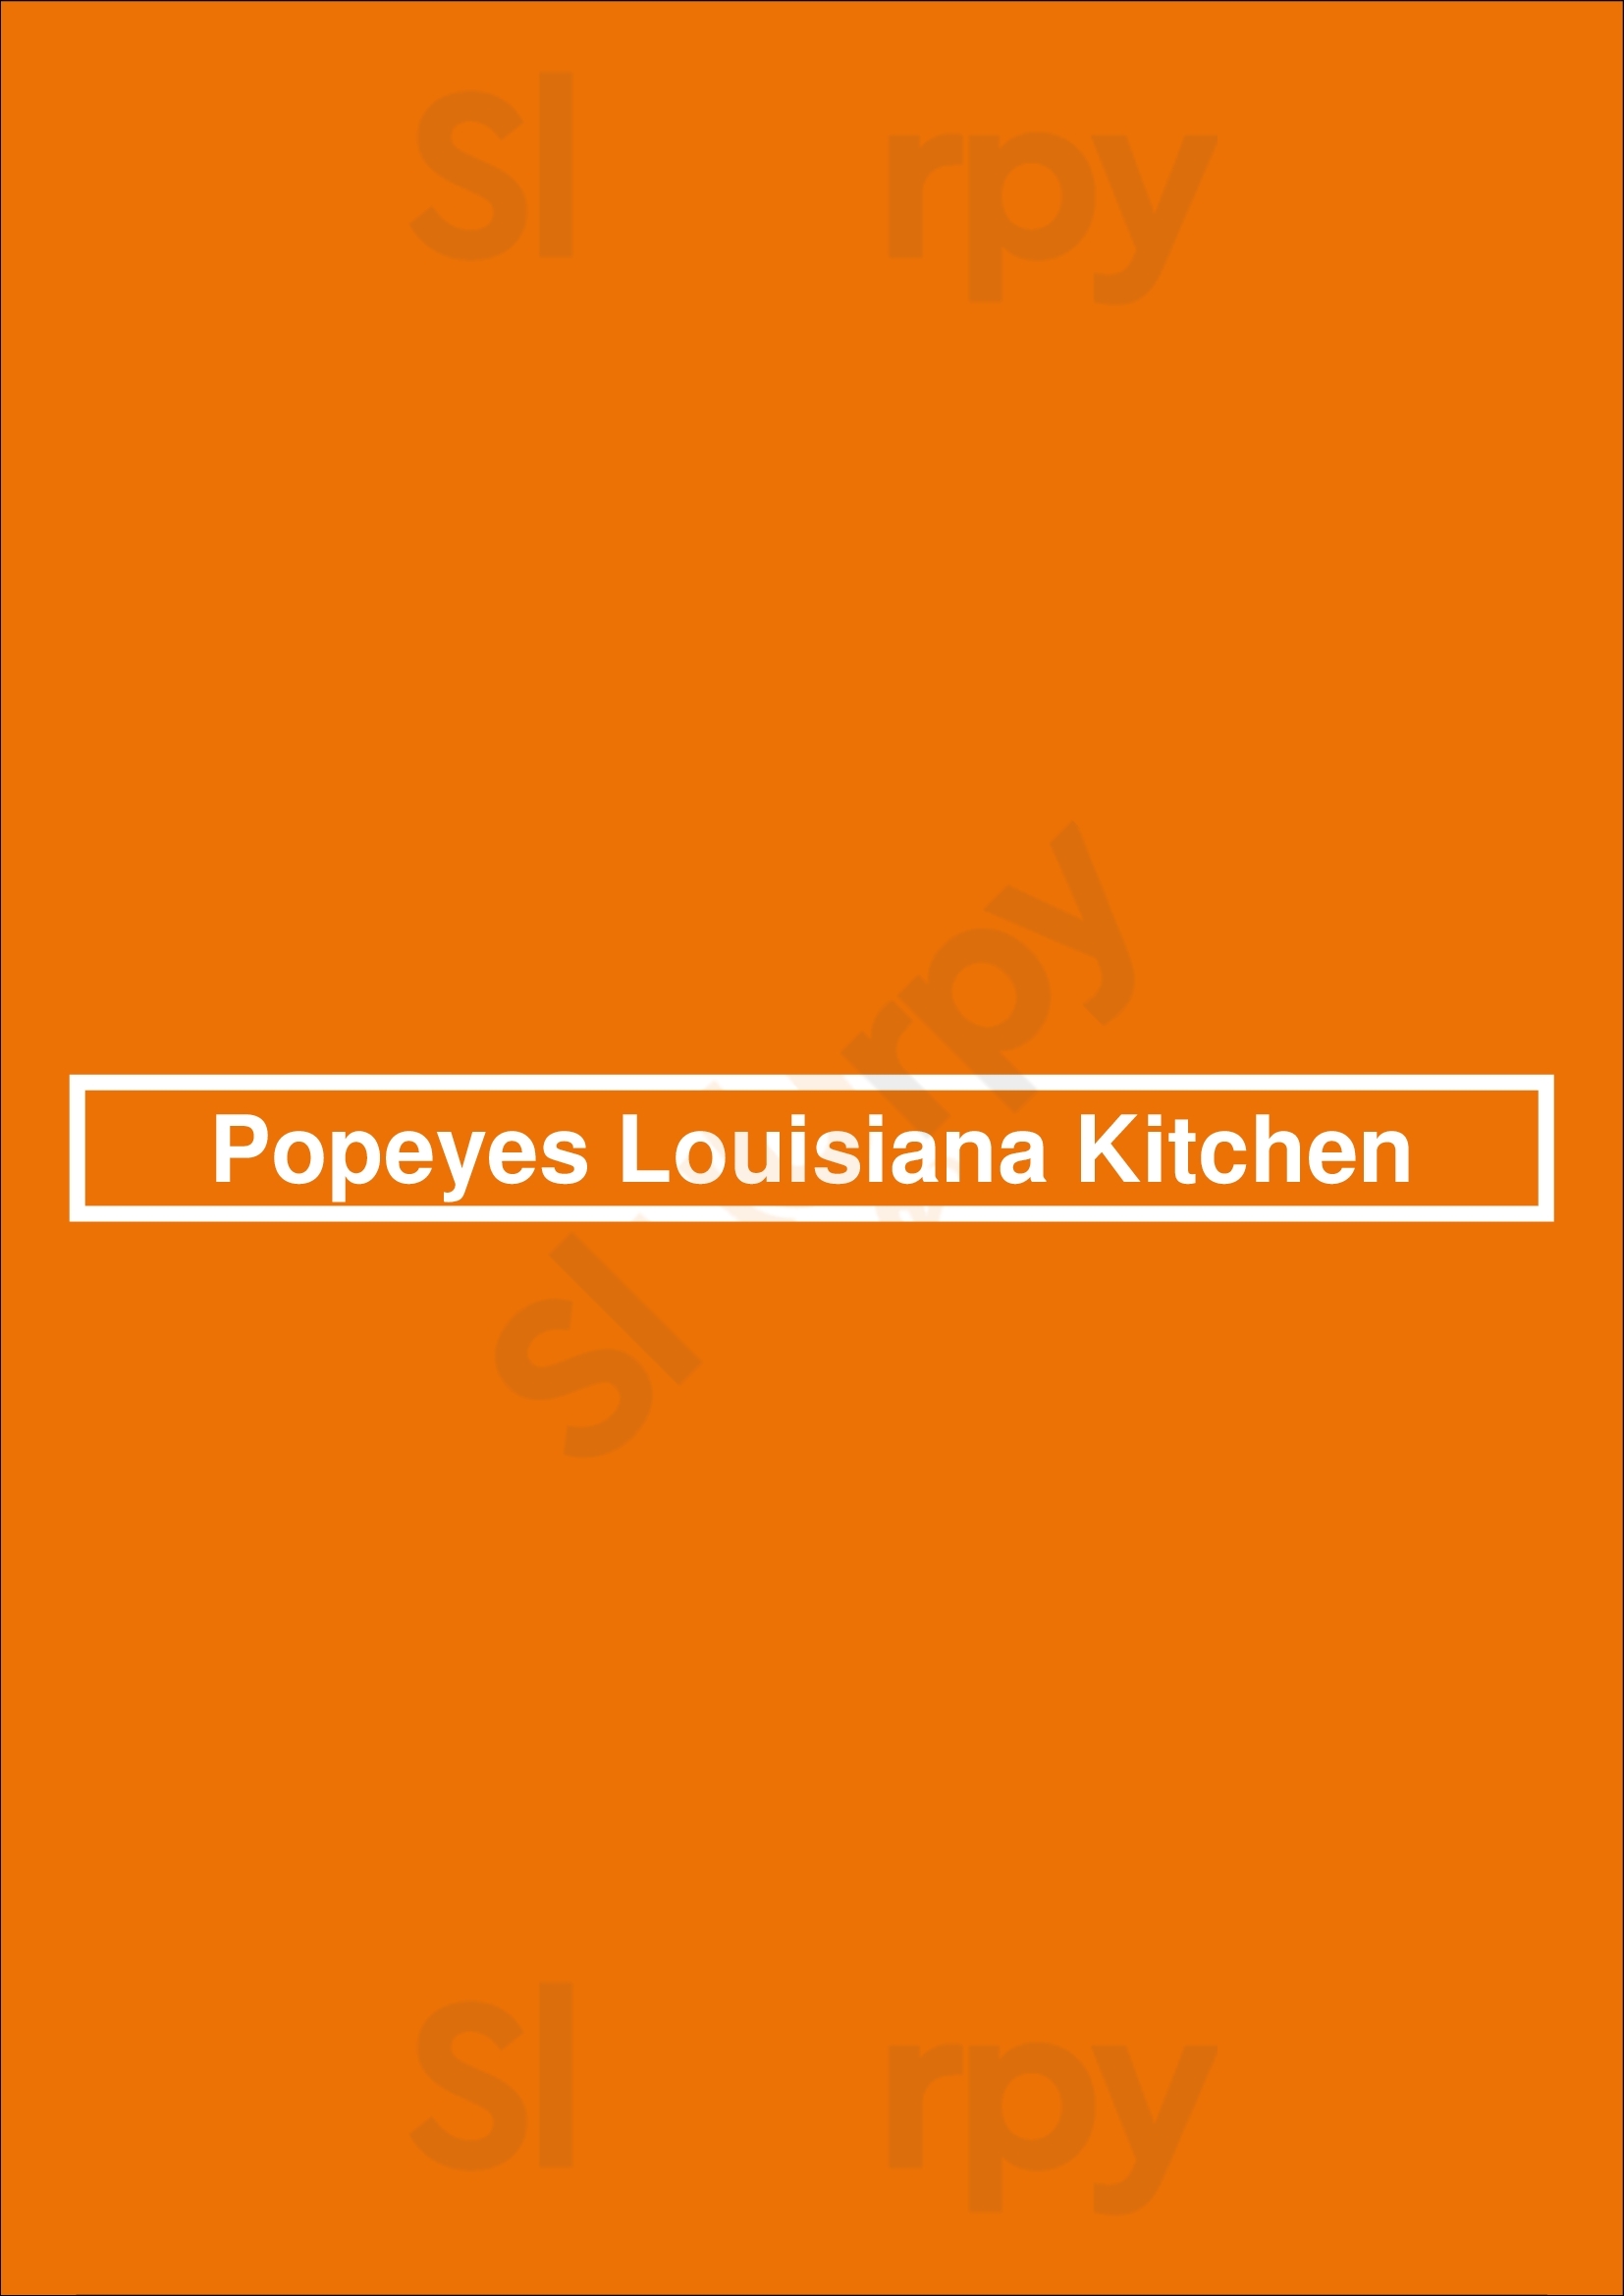 Popeyes Louisiana Kitchen Whitby Menu - 1